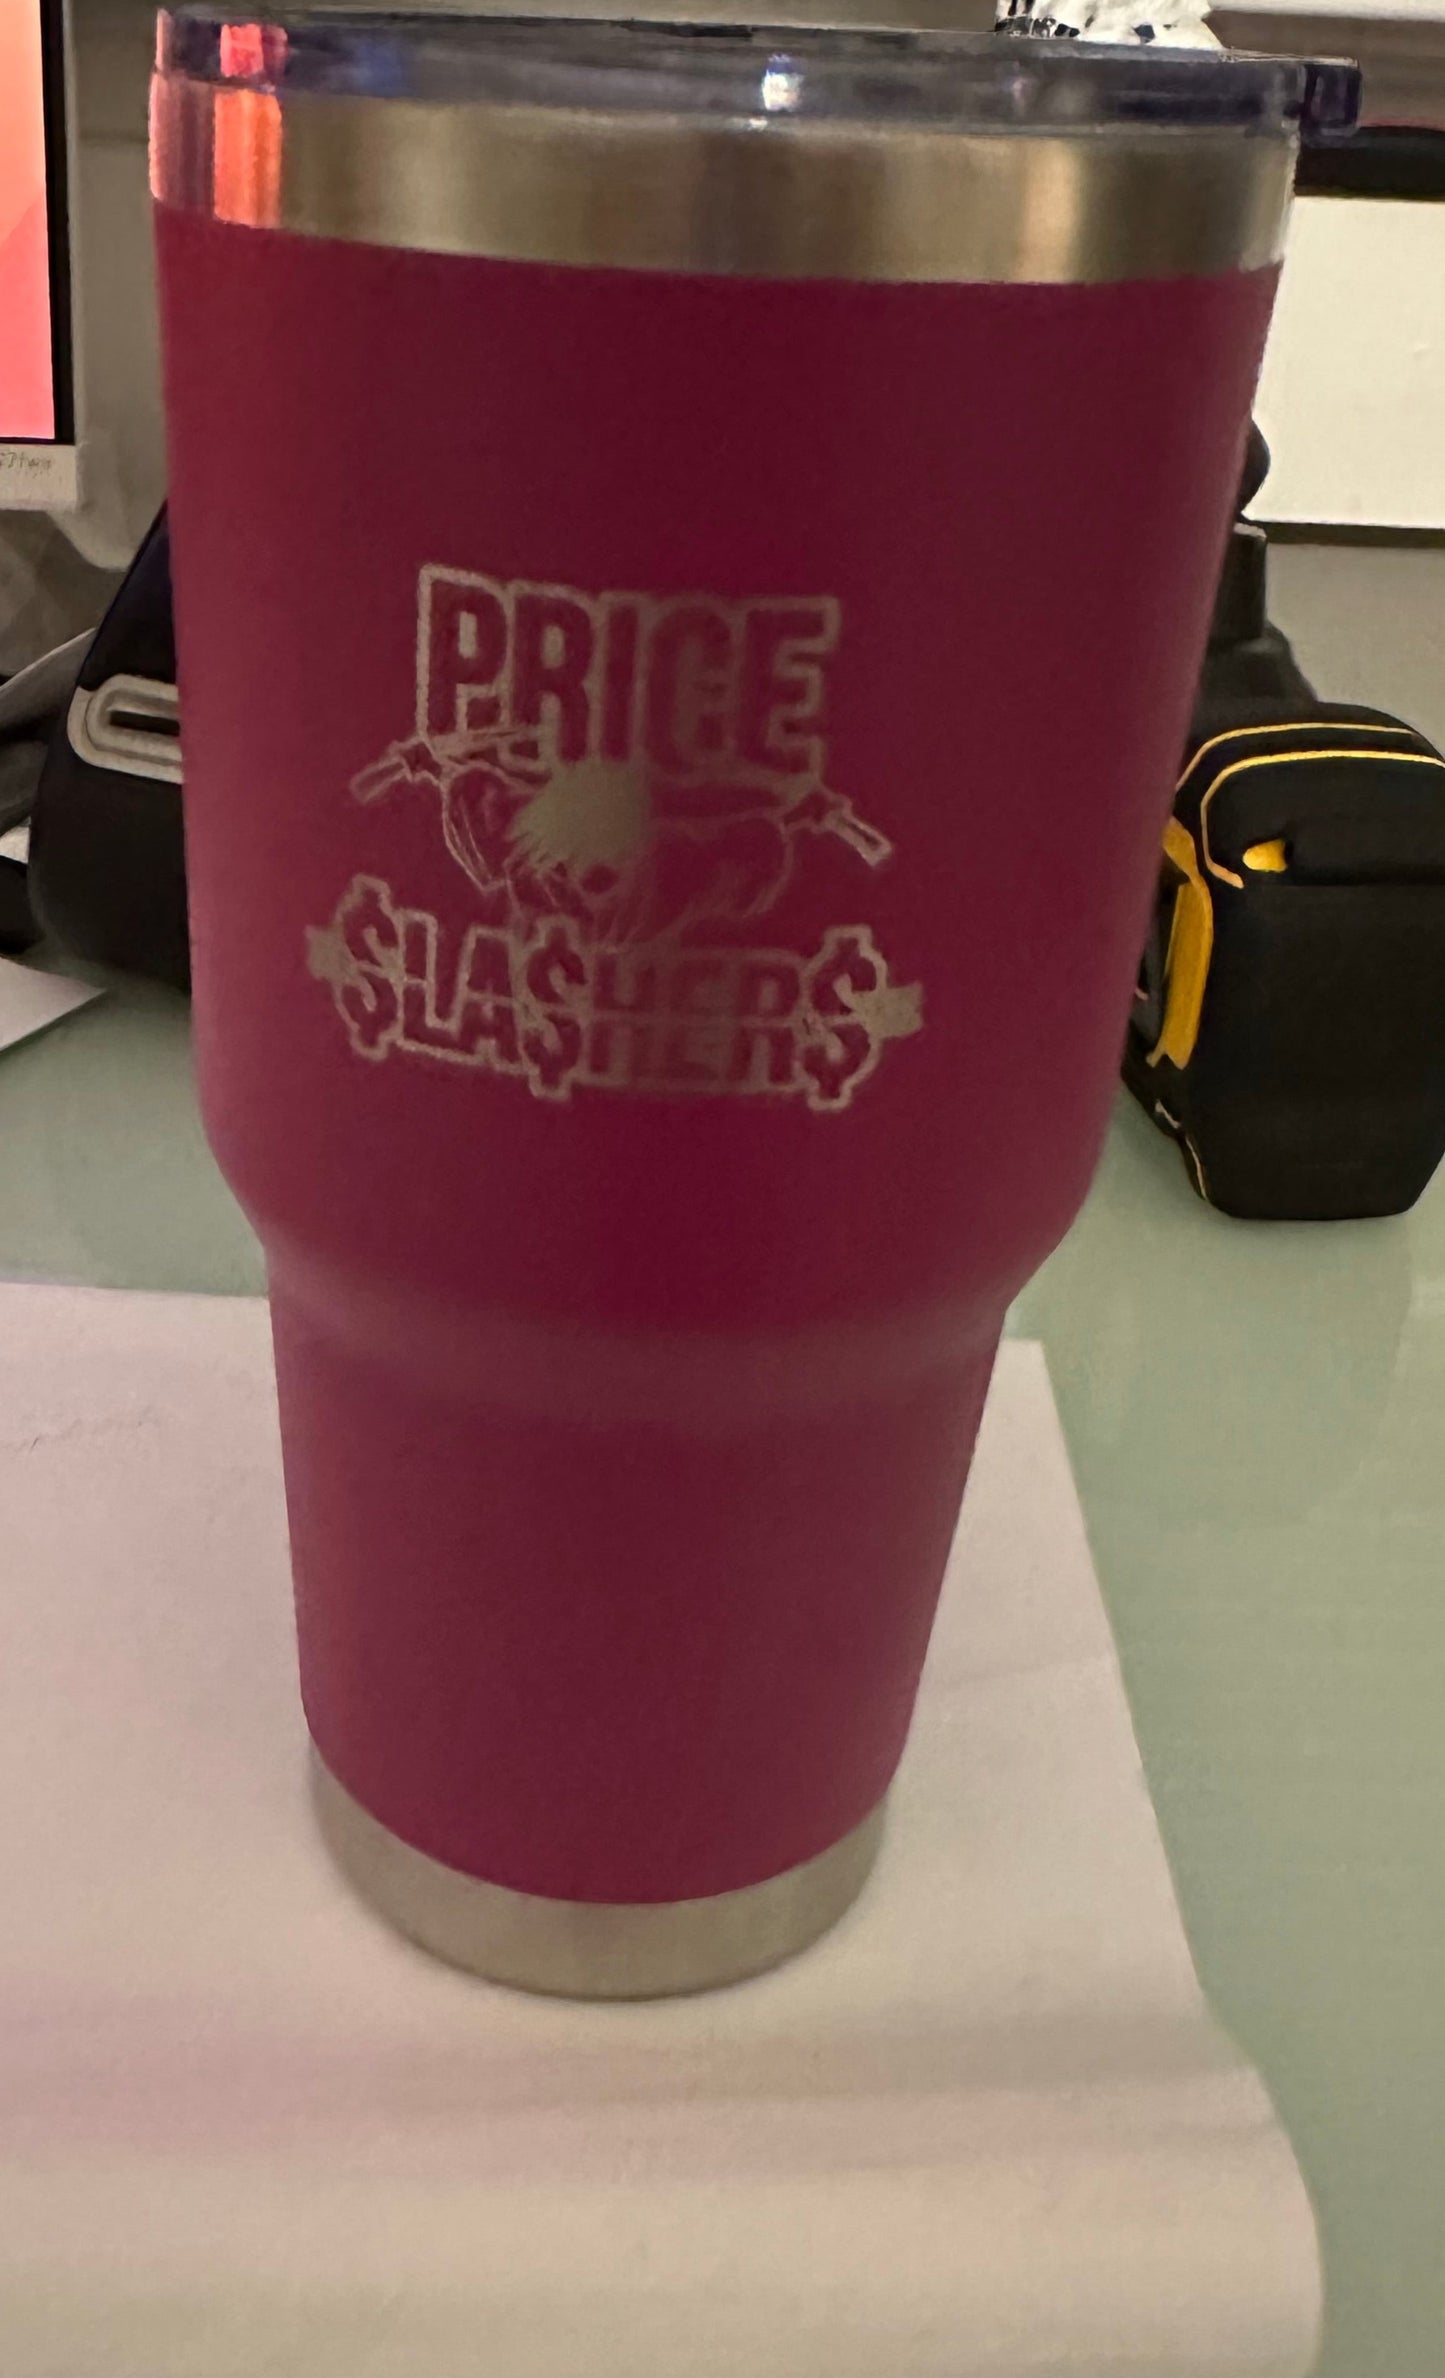 Price Slashers Cup